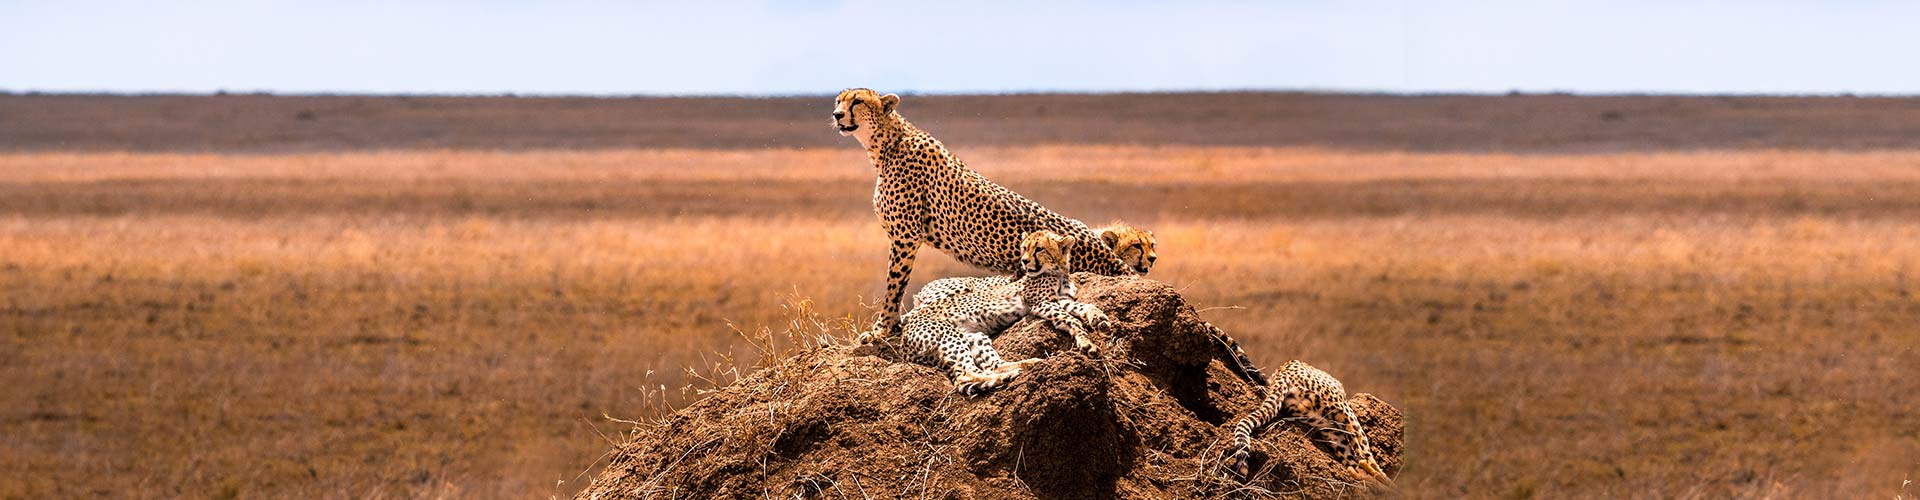 serengeti-national-park-st-tanfal-banner